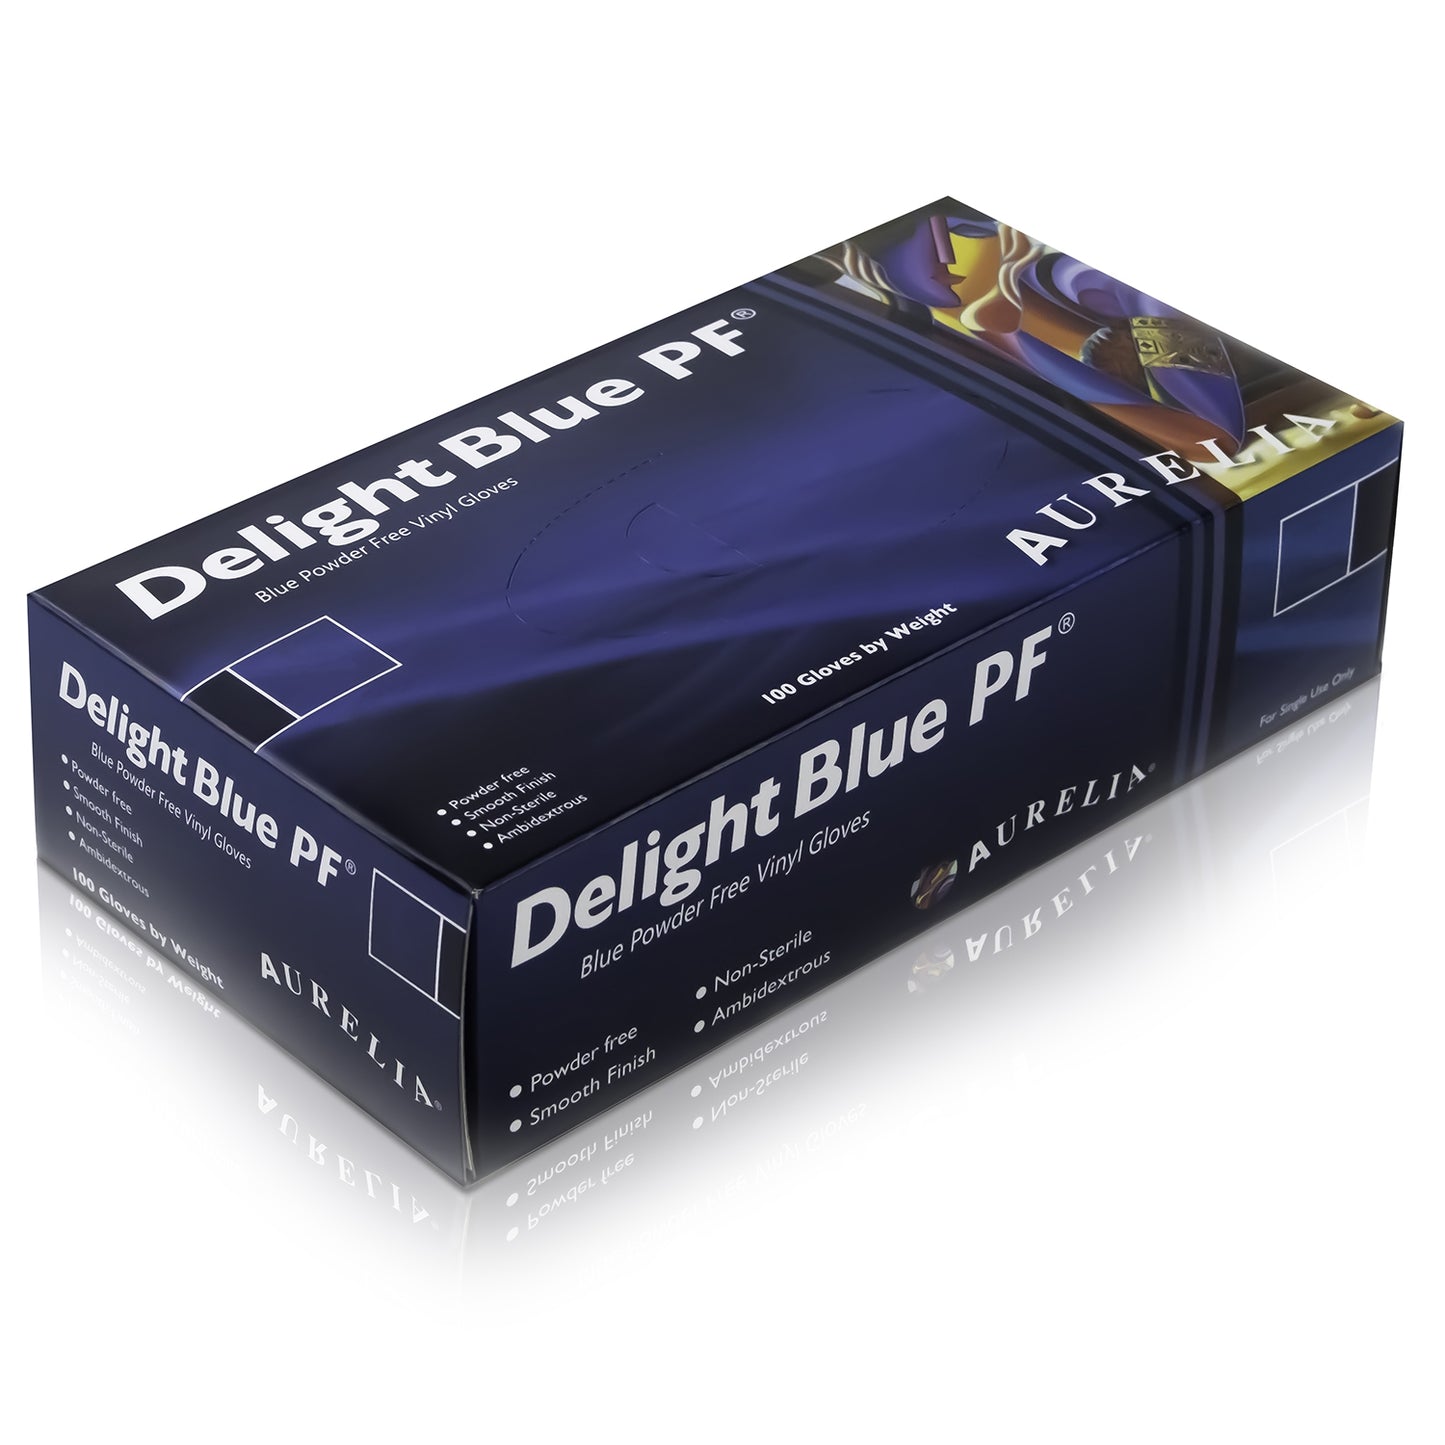 Aurelia Delight Blue PF Vinyl Powder free examination gloves S (Box of 100)